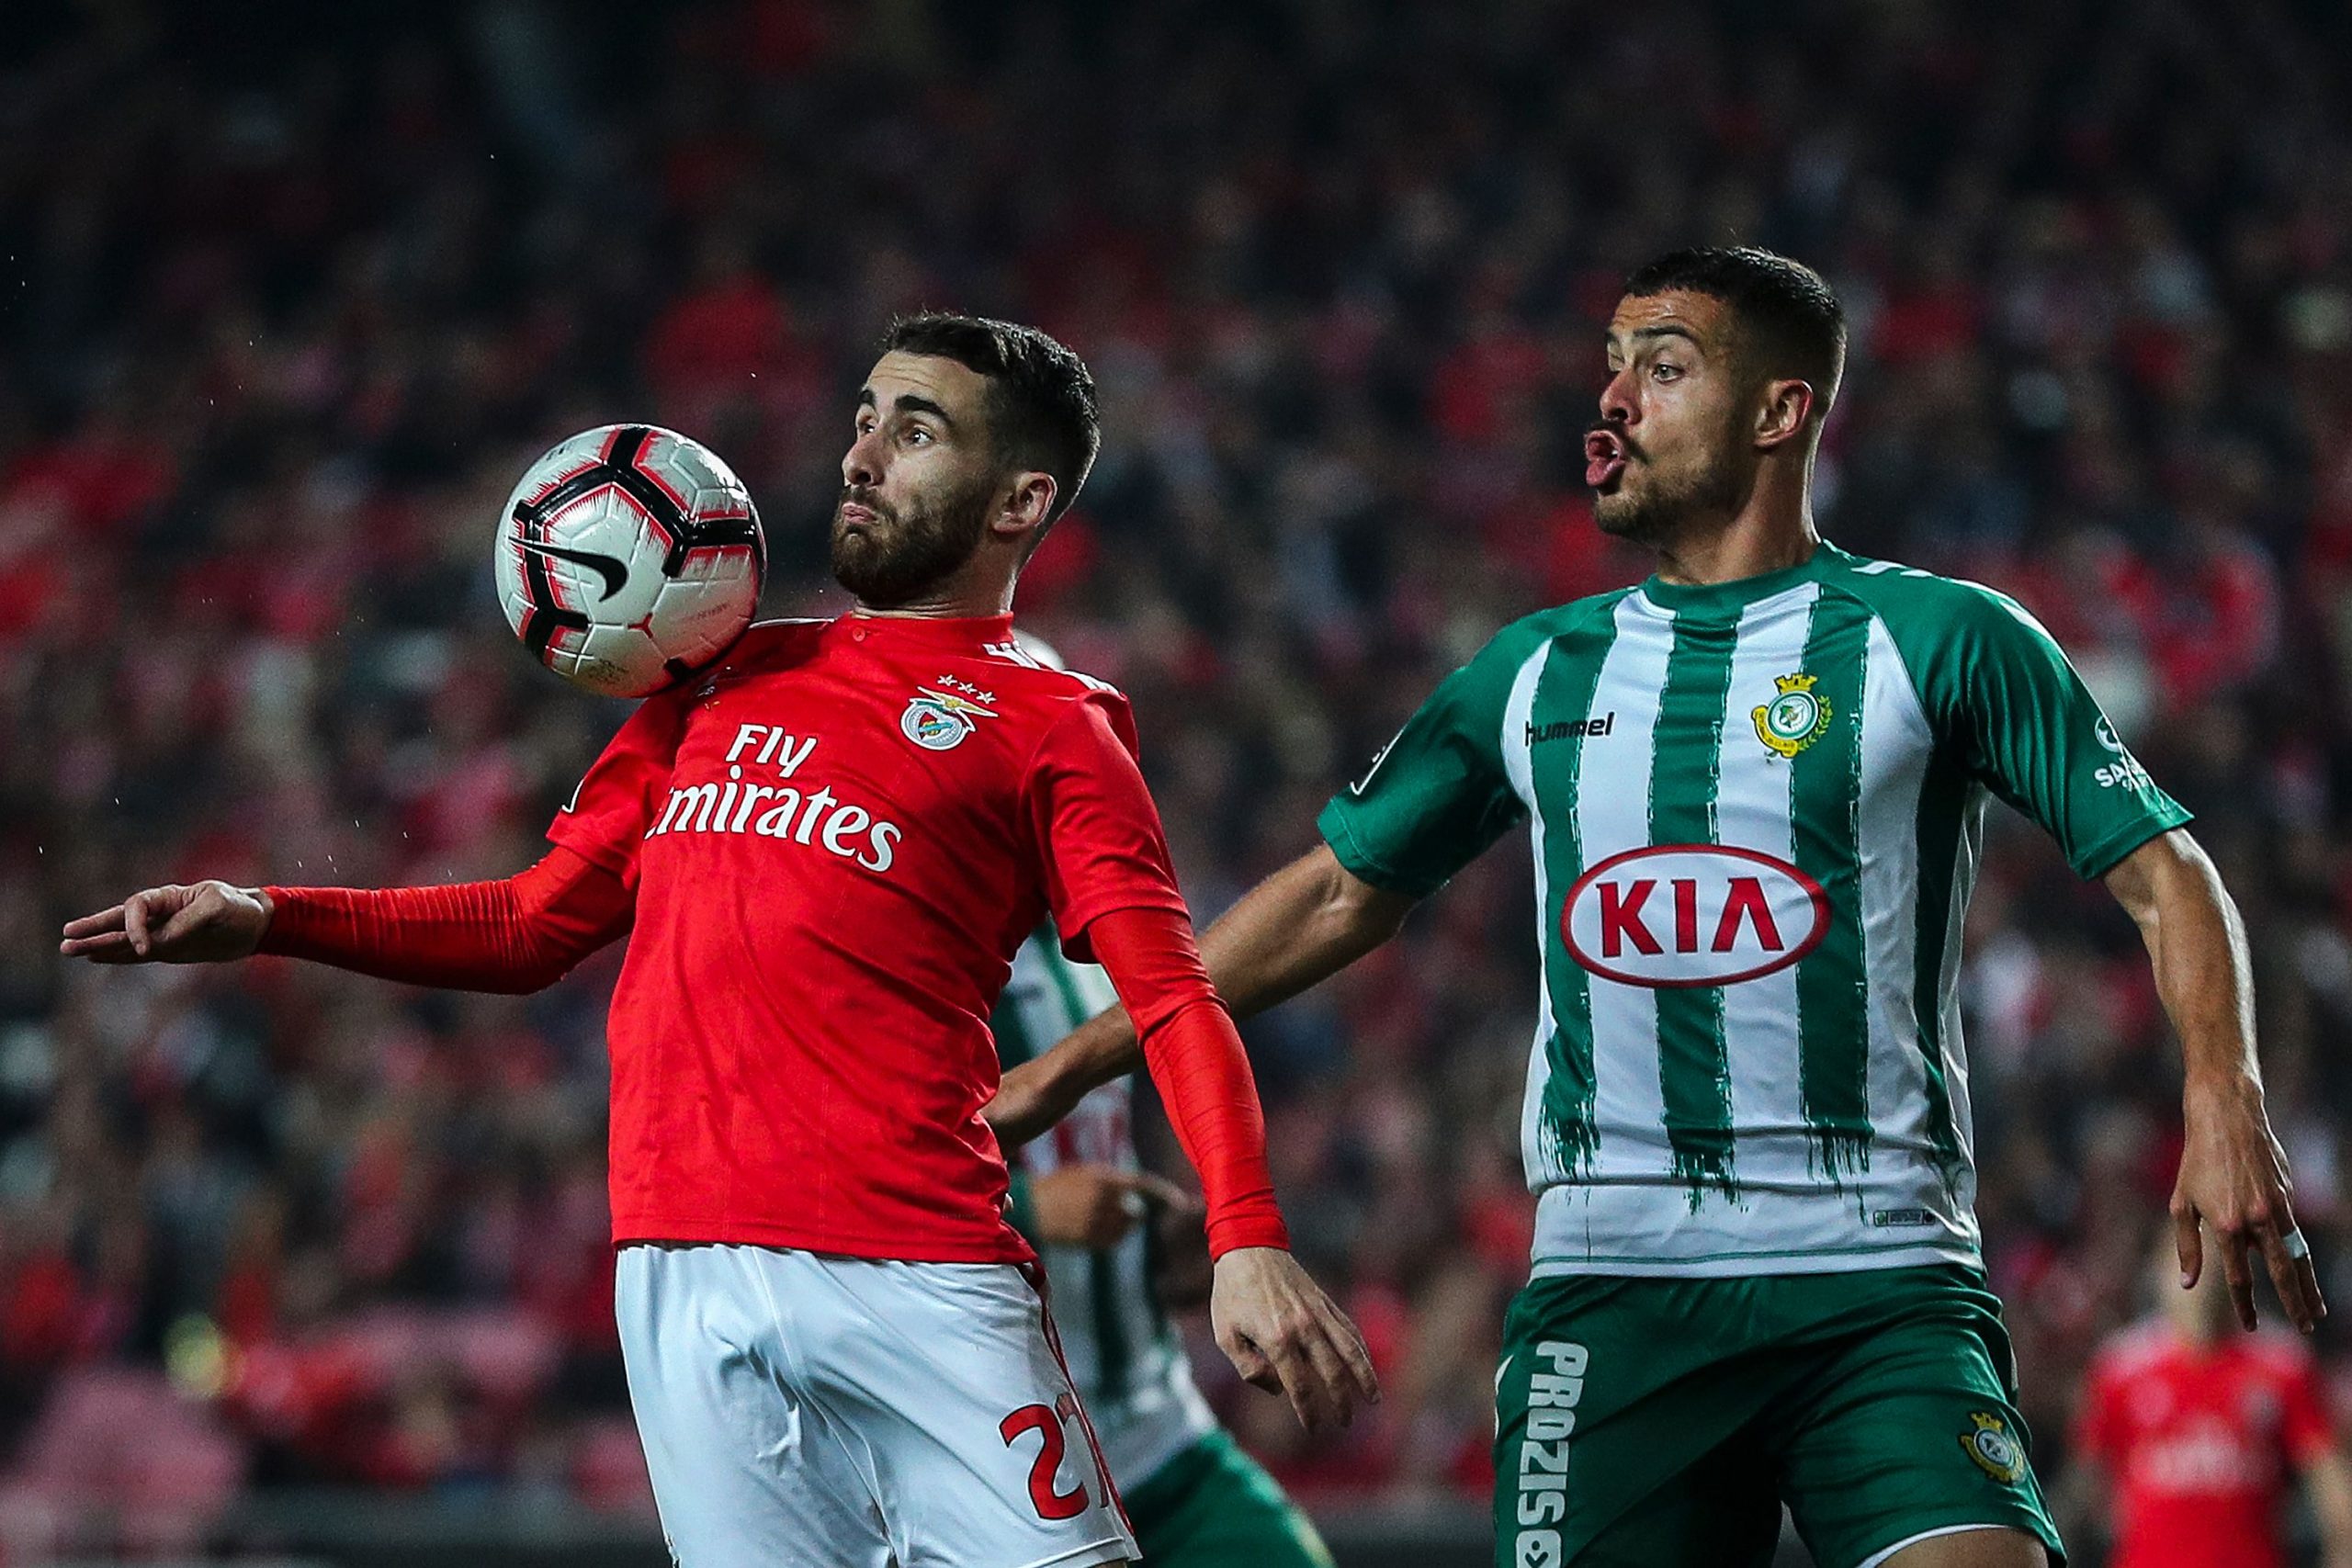 Rafa Silva (L) in action against Vitoria Setubal (Getty Images)